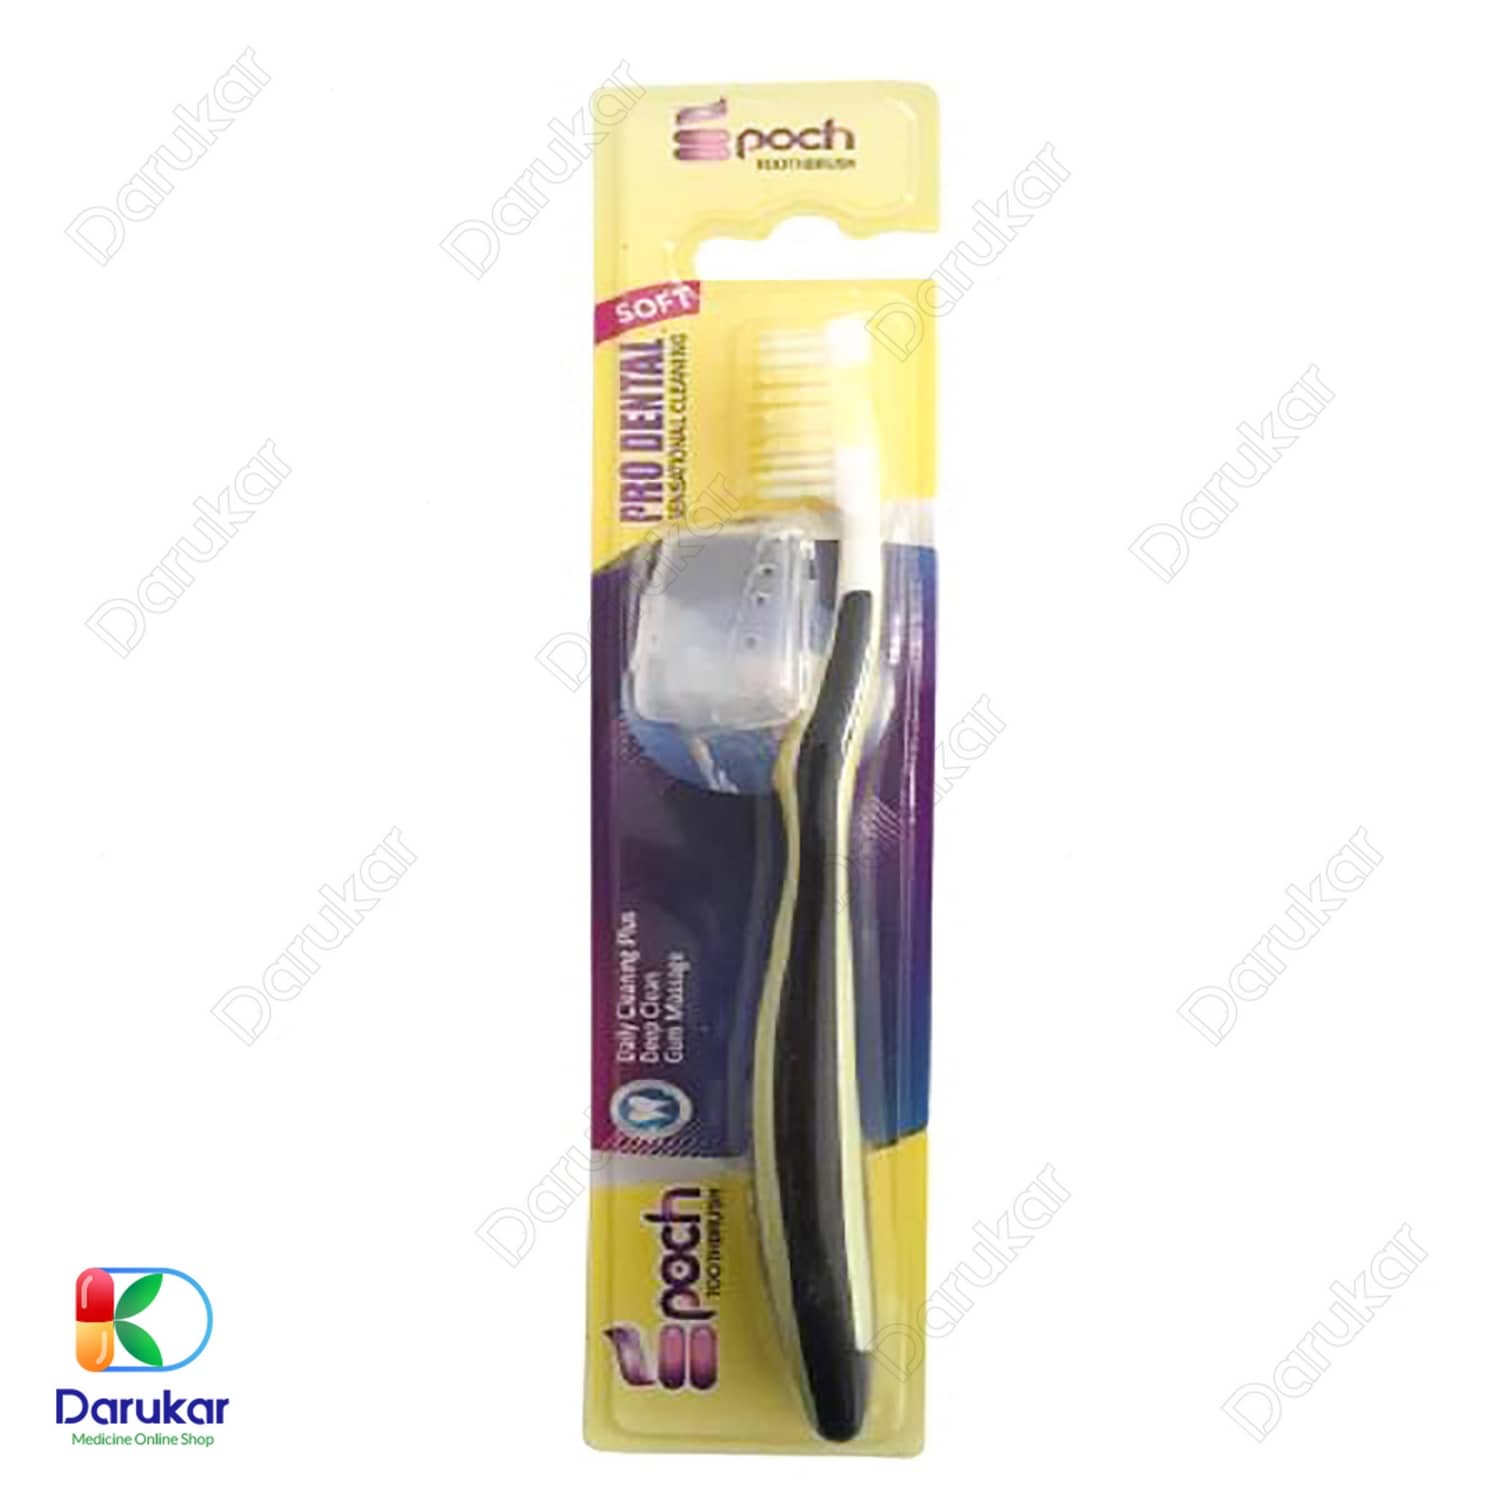 Epoch Pro Dental Toothbrush Image Gallery